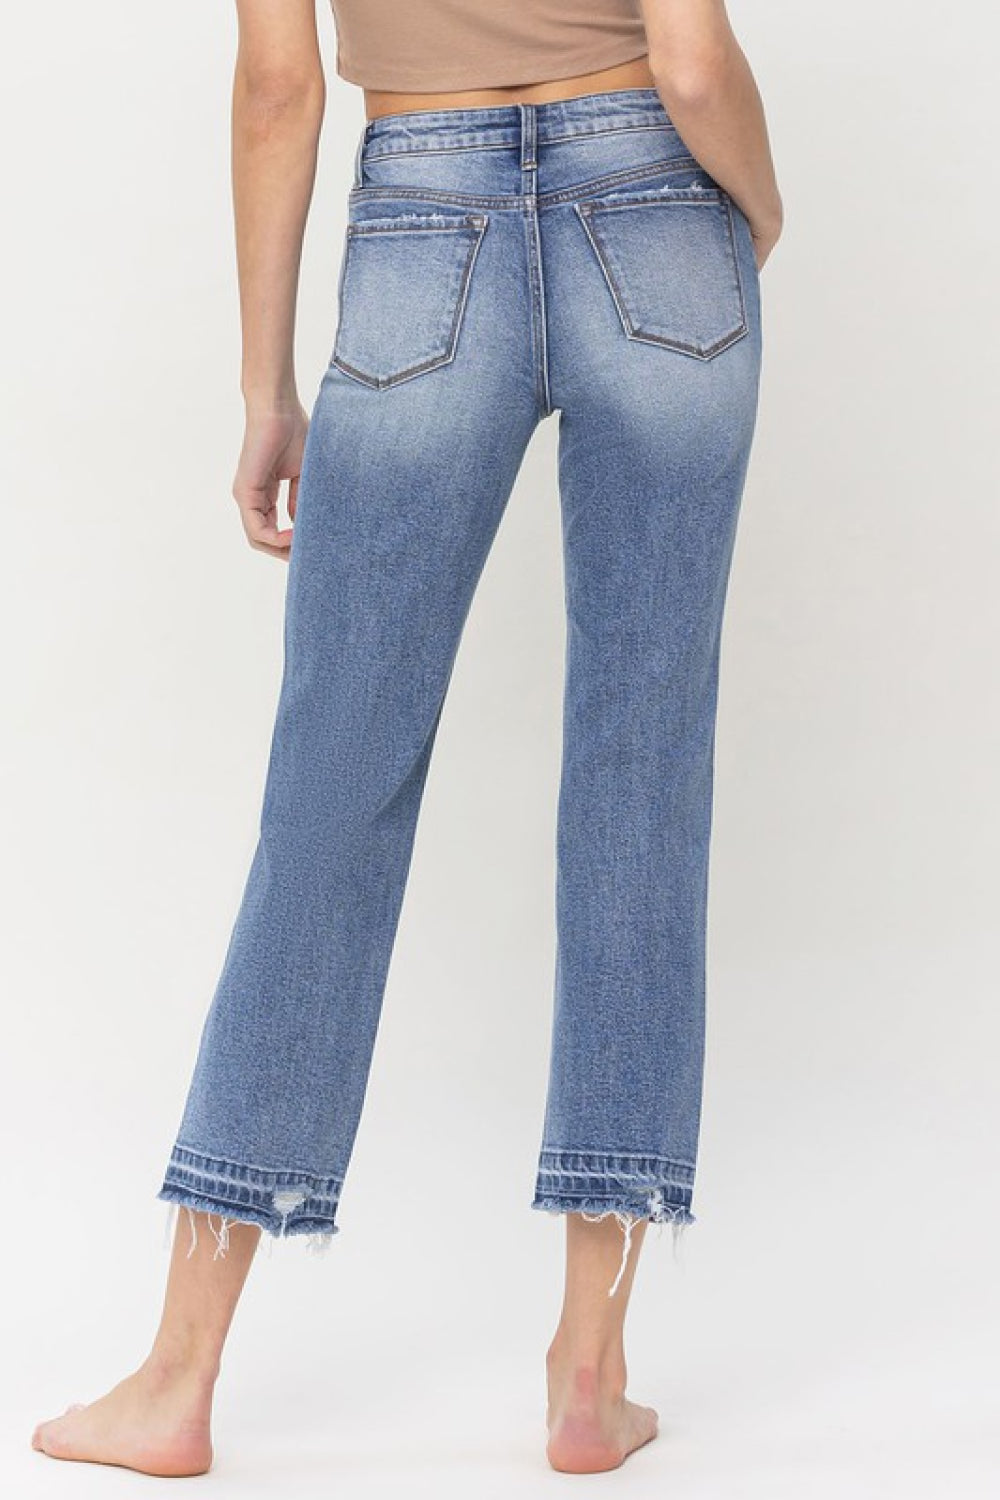 Light Gray Lovervet Full Size Lena High Rise Crop Straight Jeans Pants